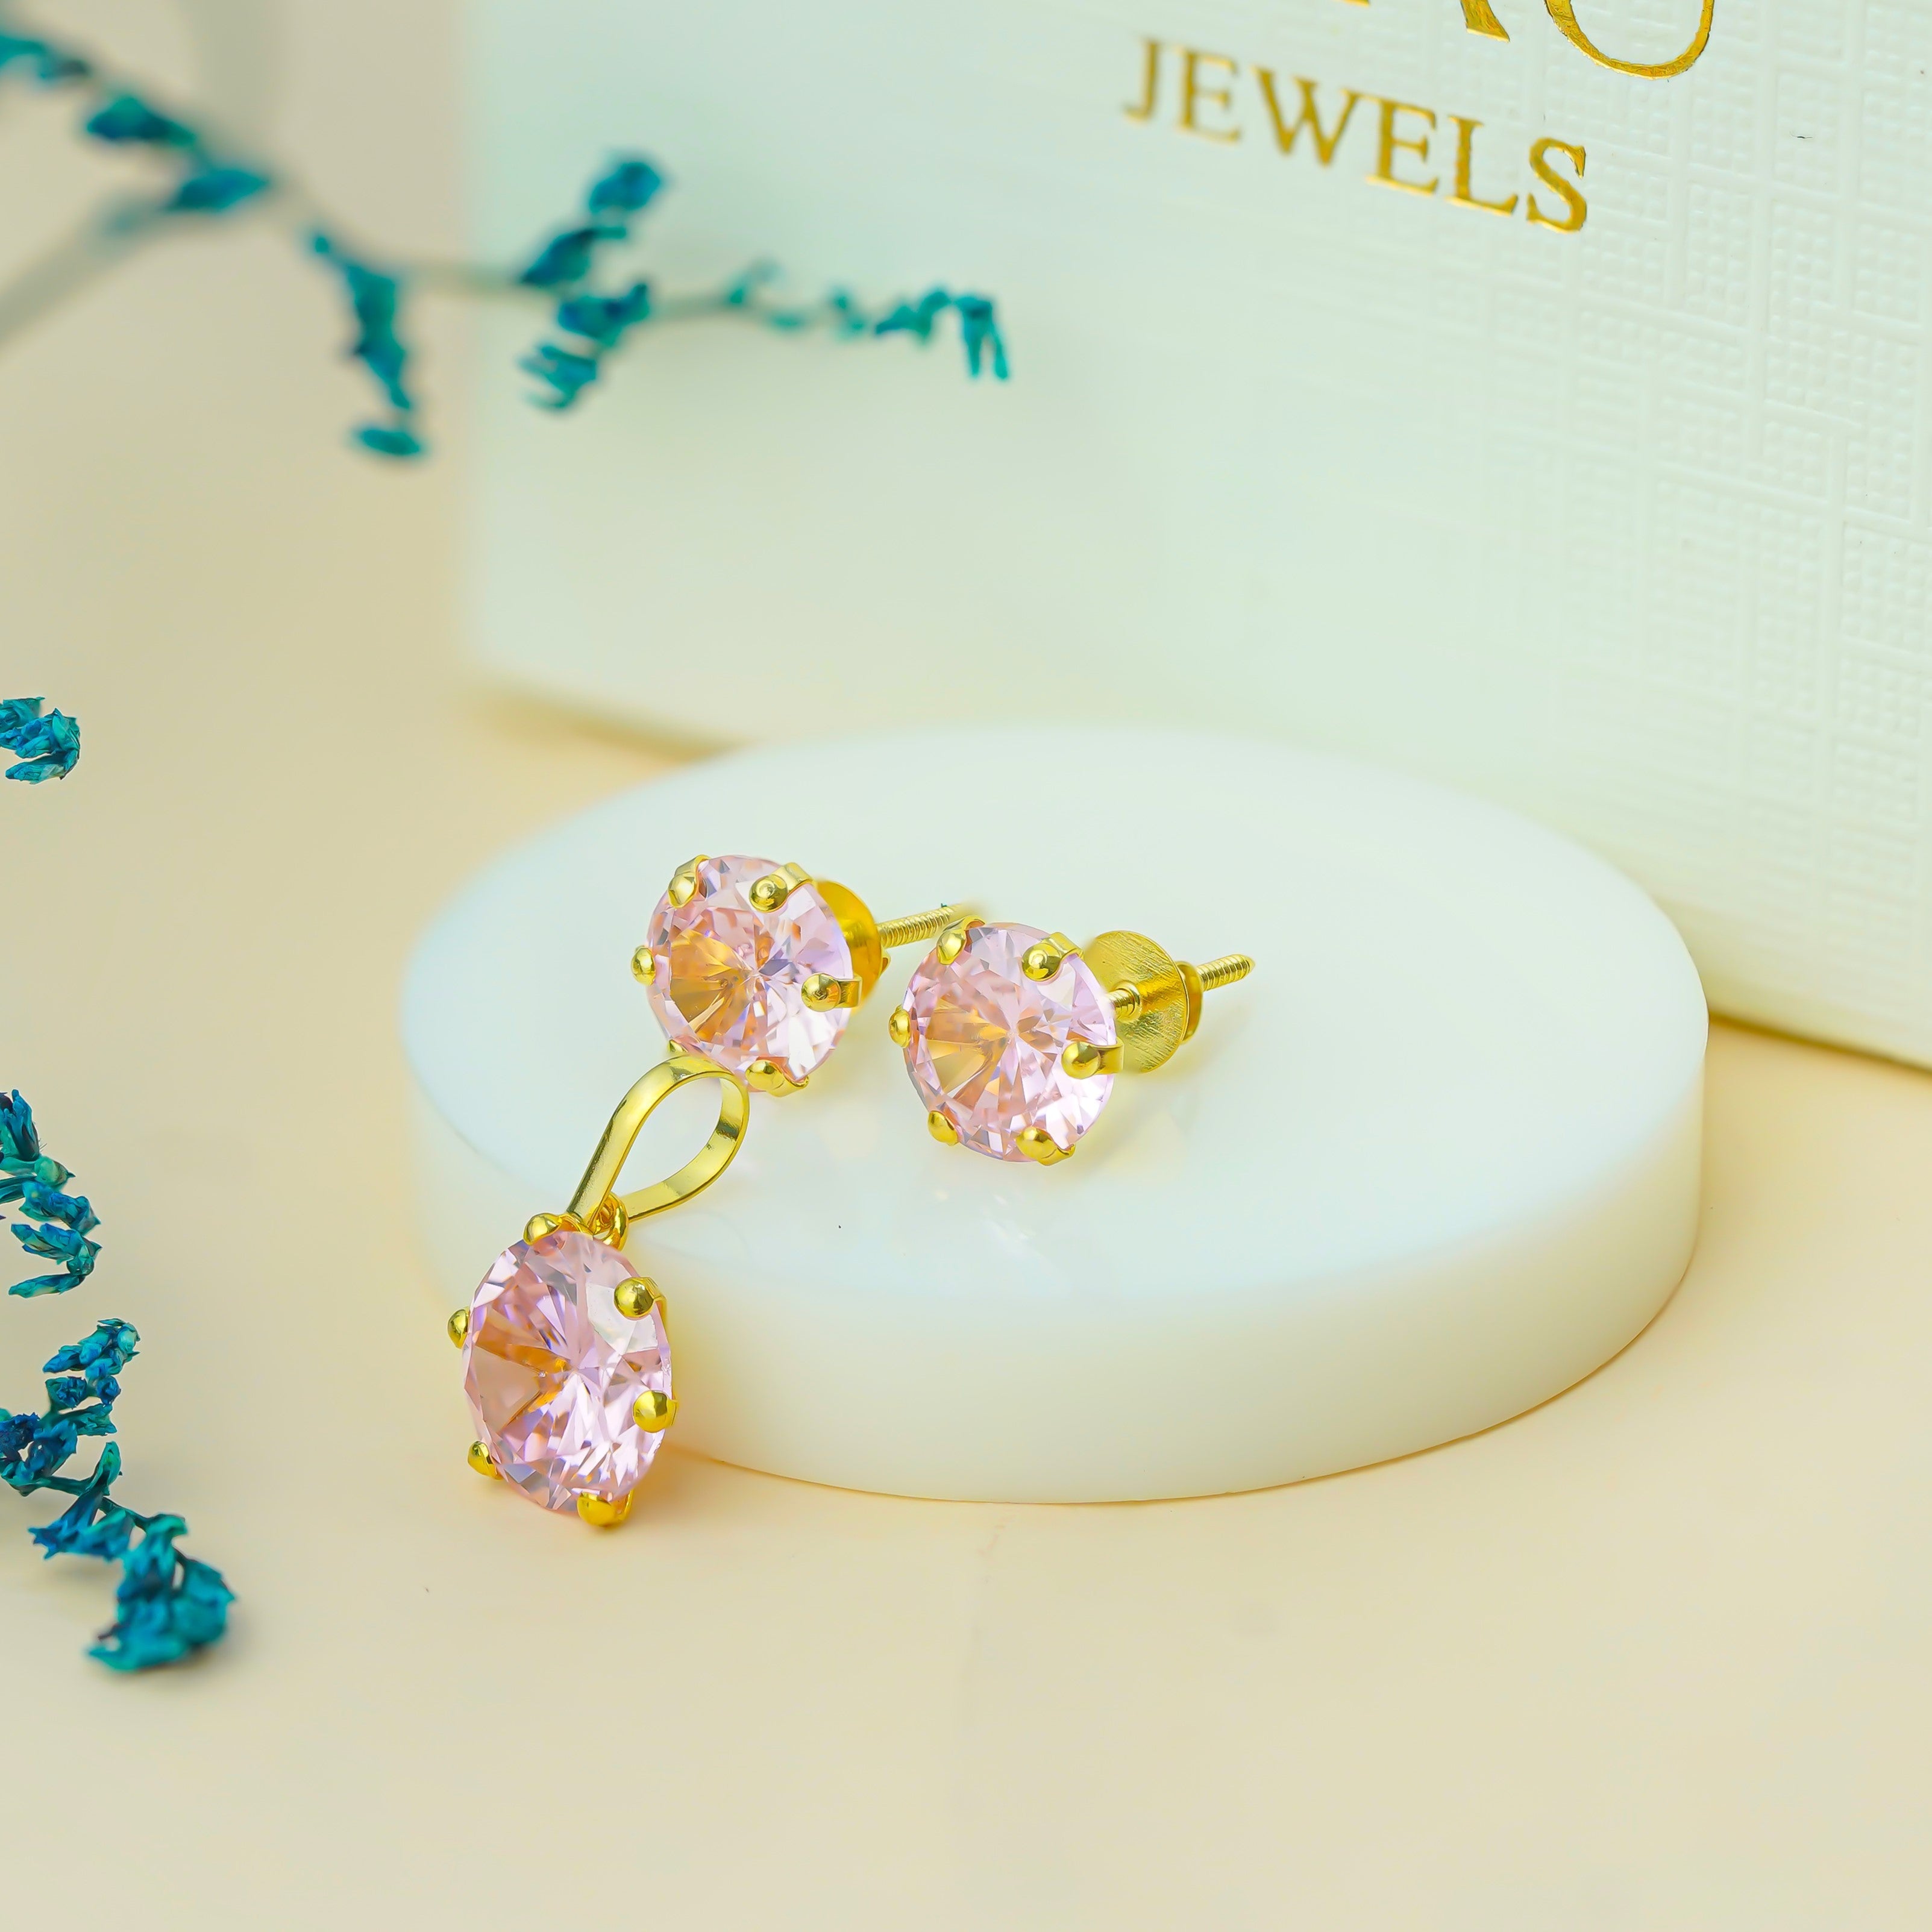 10 KT Gold Pink Round Diamond Pendant & Earring Set